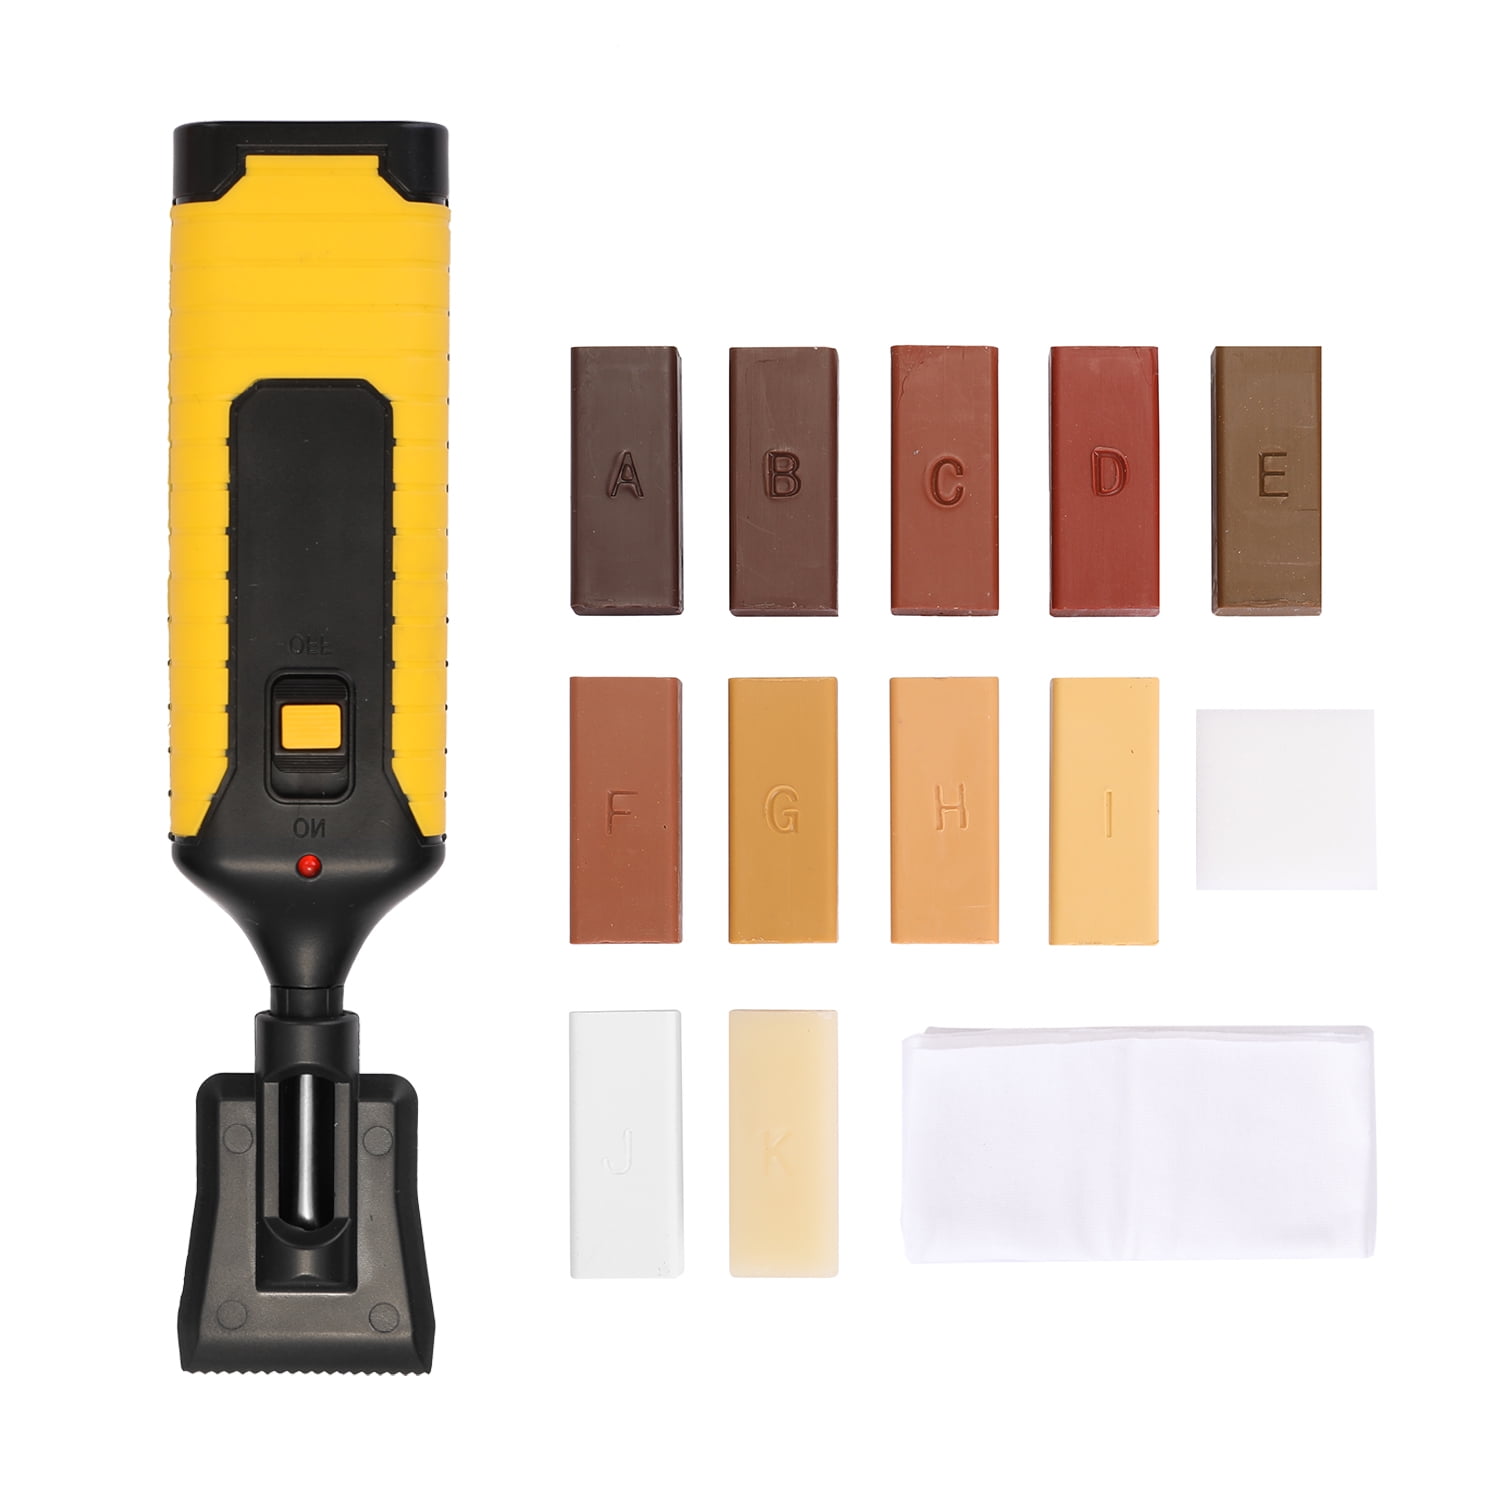 Wood floor scratch repair kit, Laminate floor repair kit, Sturdy